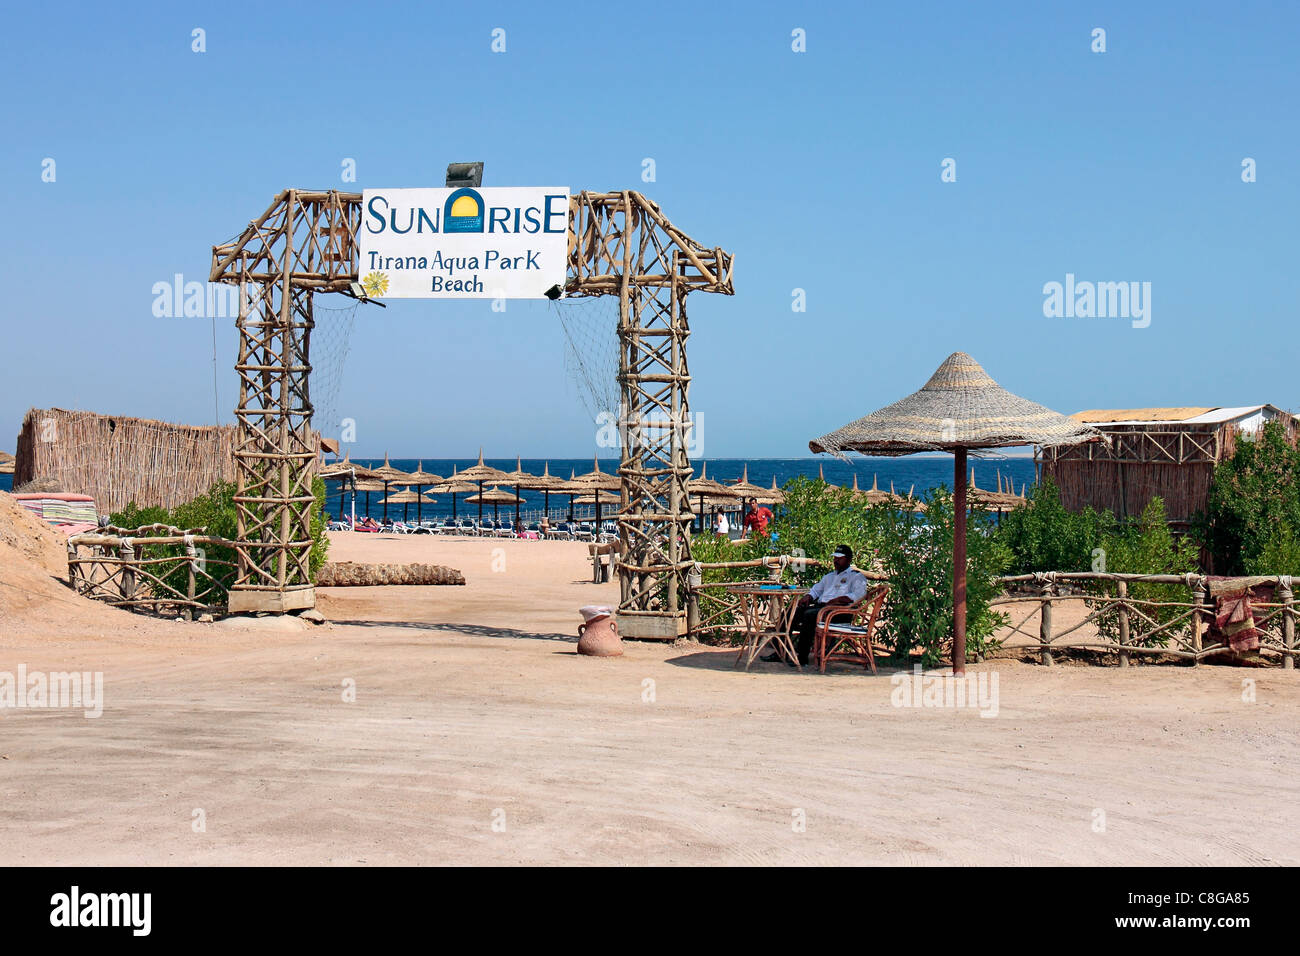 La entrada a la playa del Hotel Sunrise Tirana en el Mar Rojo, Sharm El Sheikh, Egipto Foto de stock